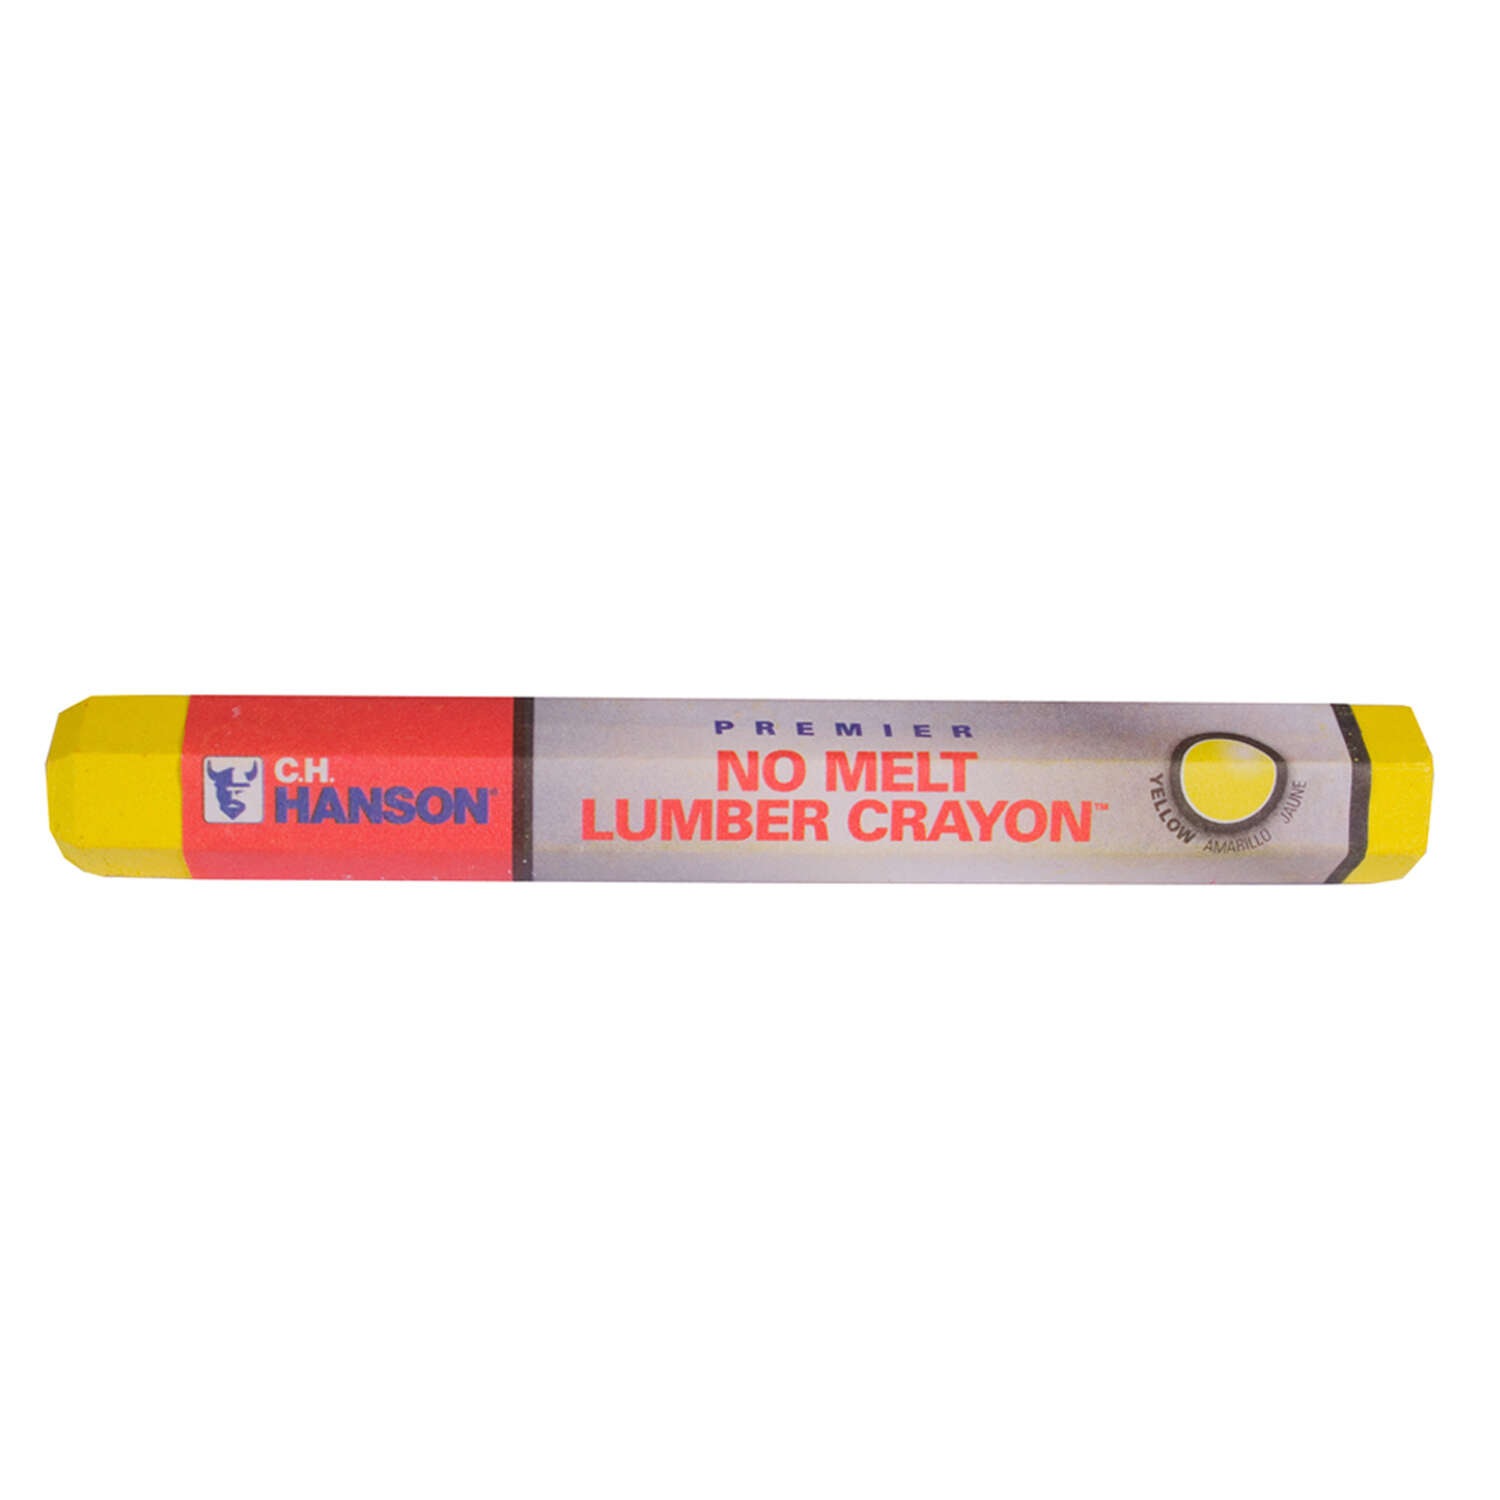 C.H. Hanson 4.5 in. L Lumber Crayon Yellow 1 pc Ace Hardware